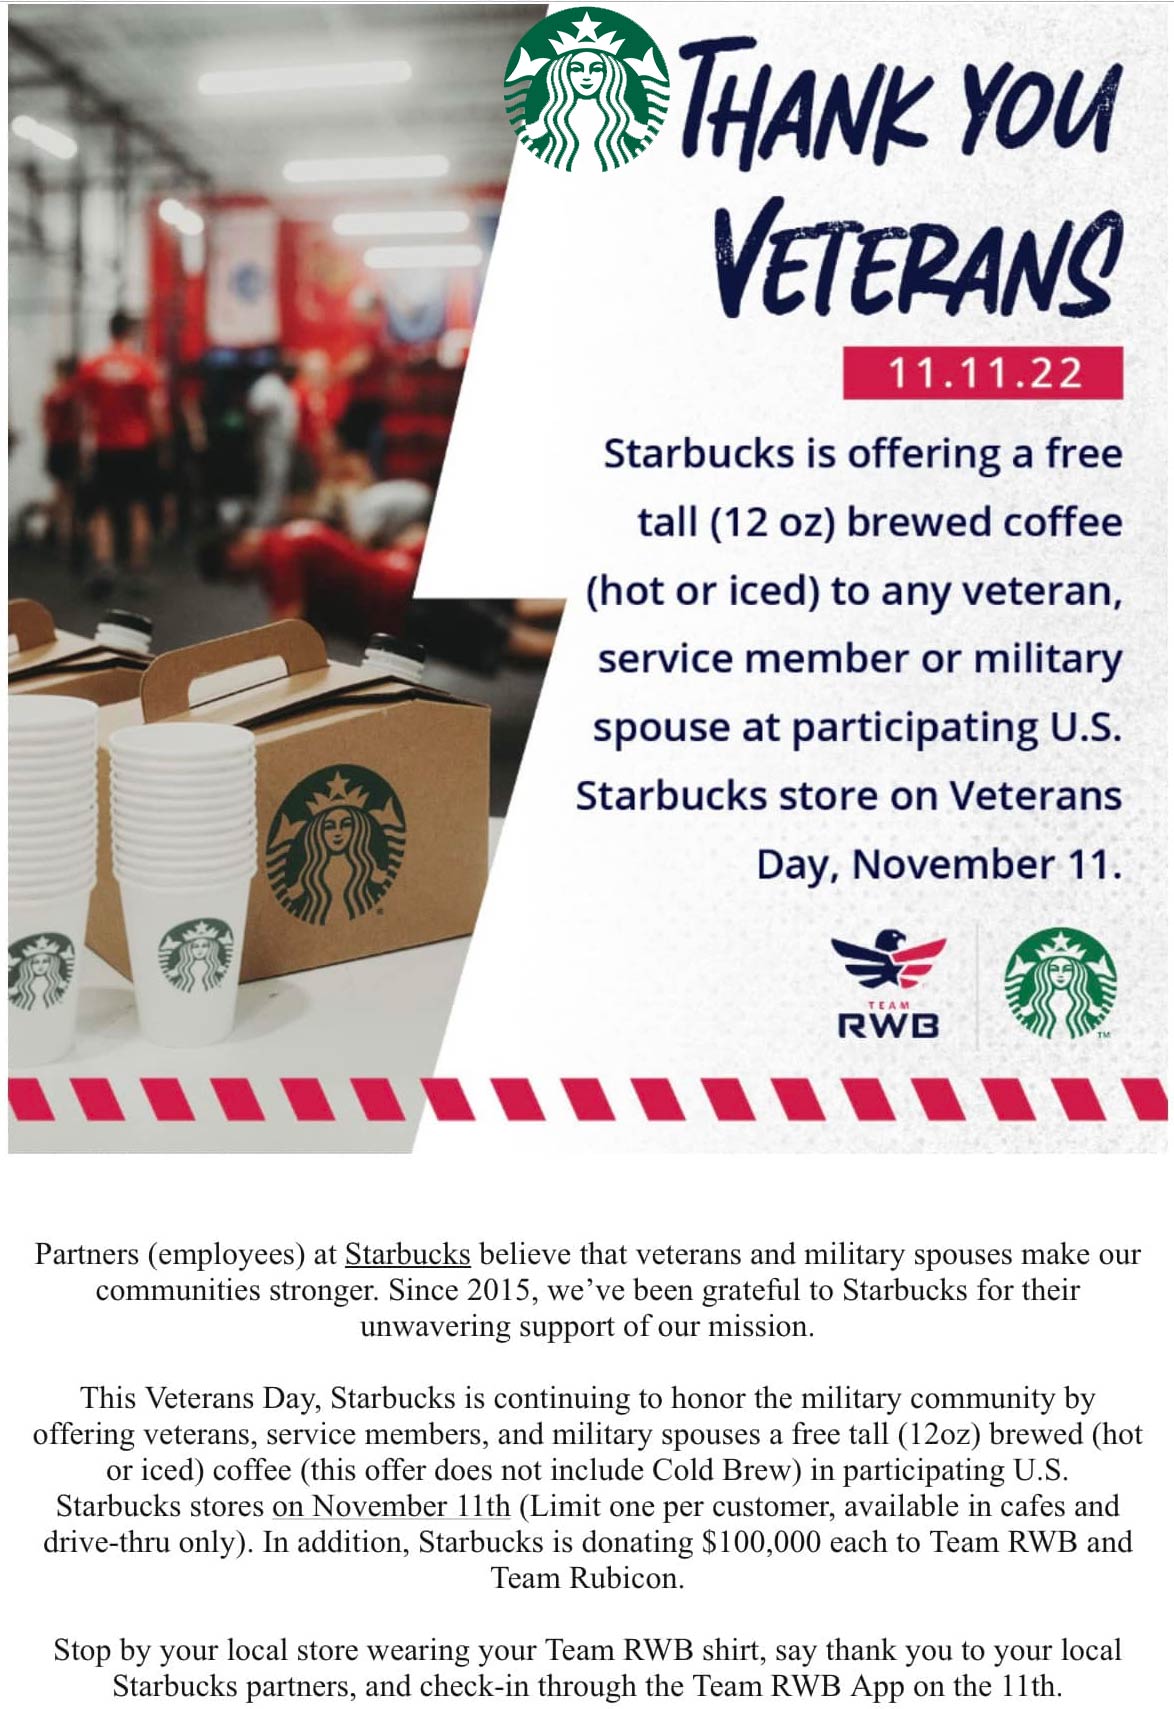 Starbucks restaurants Coupon  Veterans & spouse enjoy a free coffee today at Starbucks #starbucks 